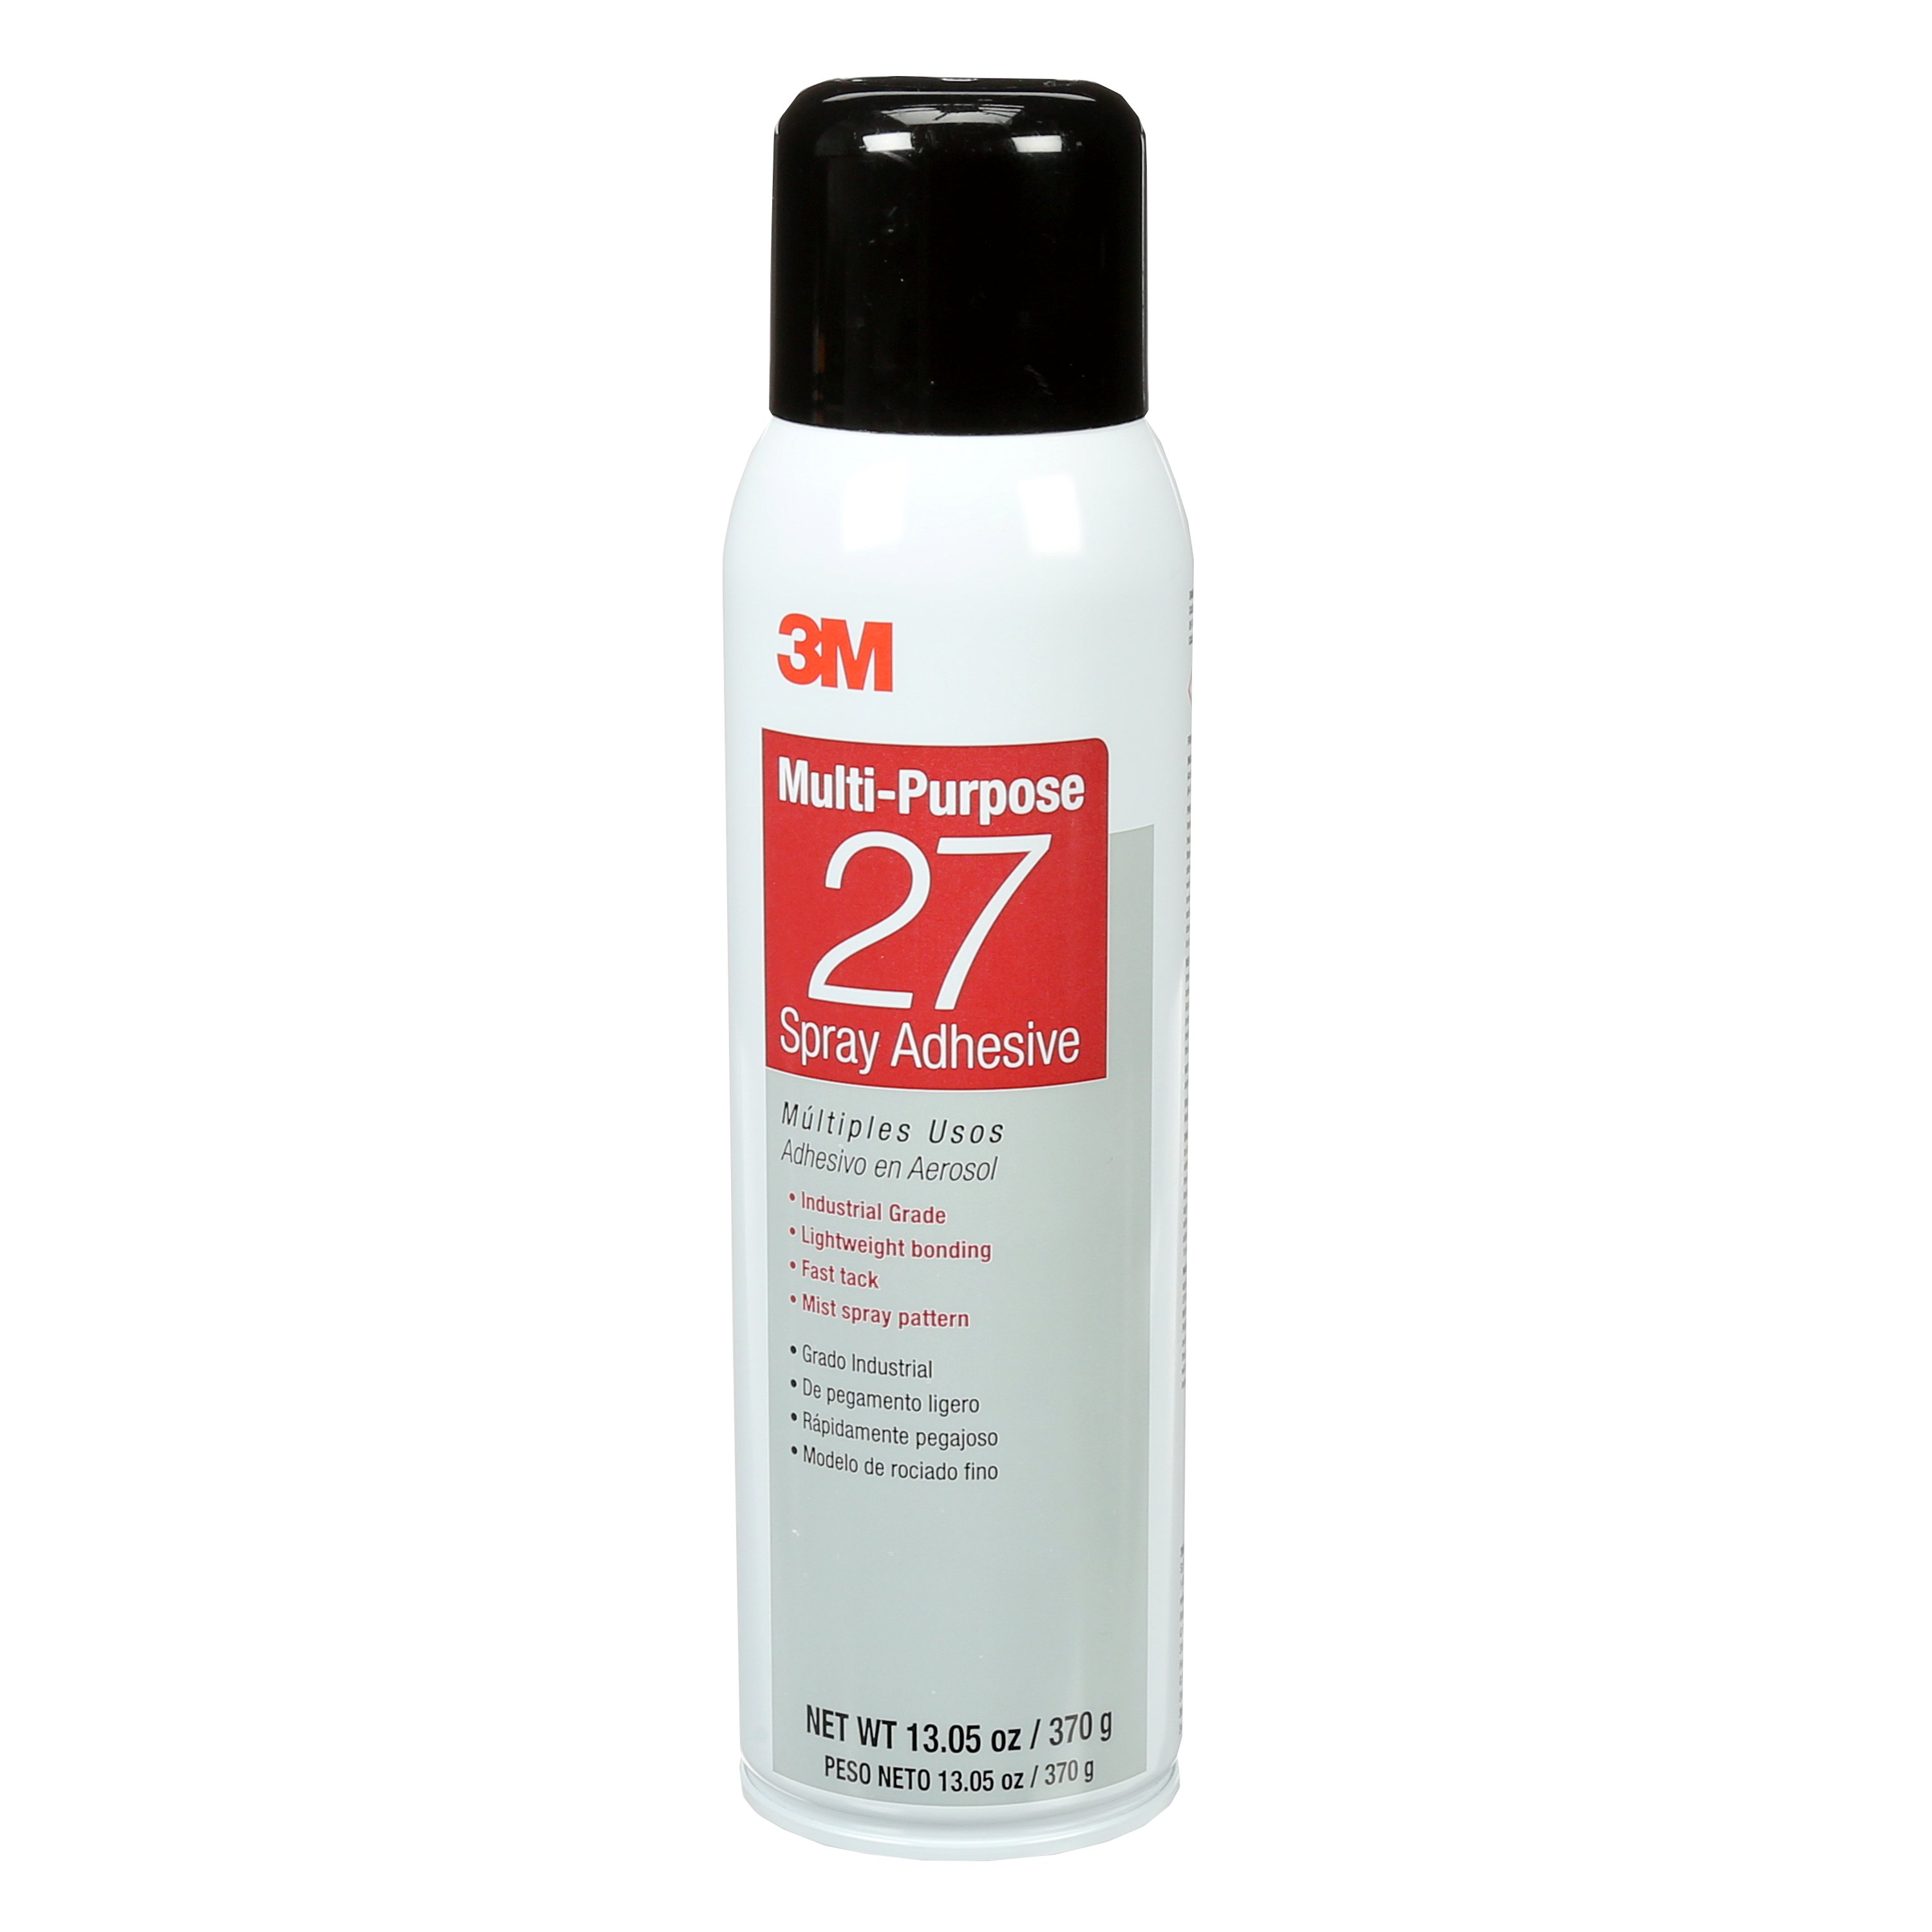 3M 27 Spray Adhesive for General Purpose Bonding